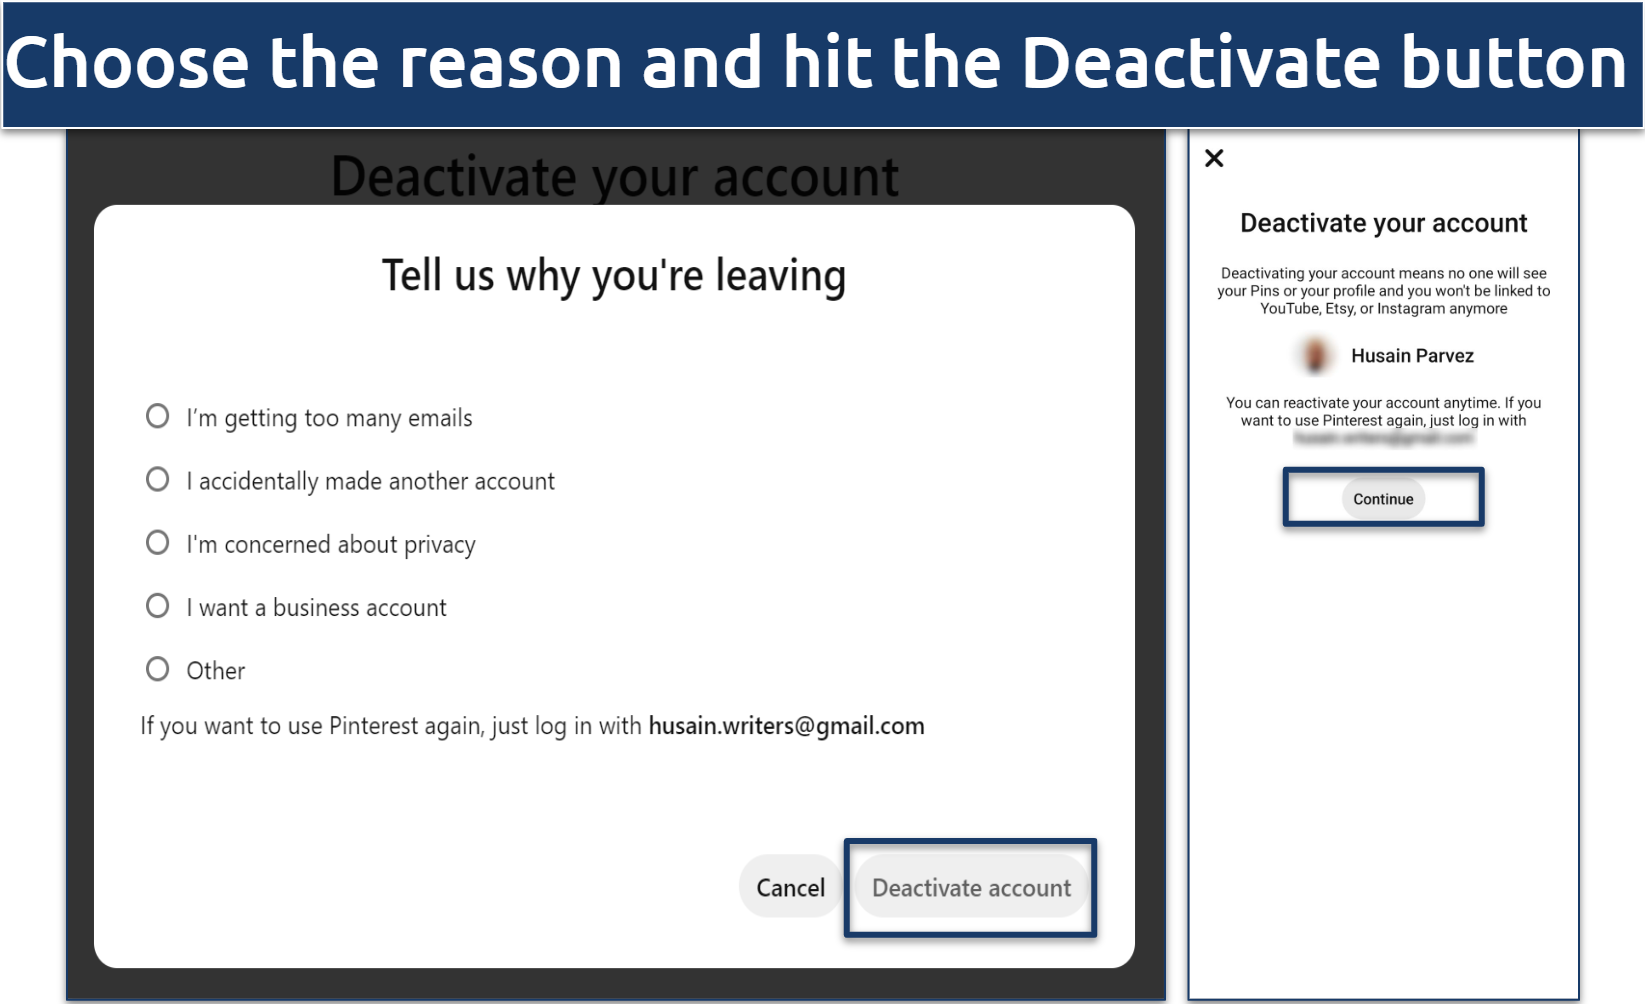 A screenshot of Pinterest's account deactivation page